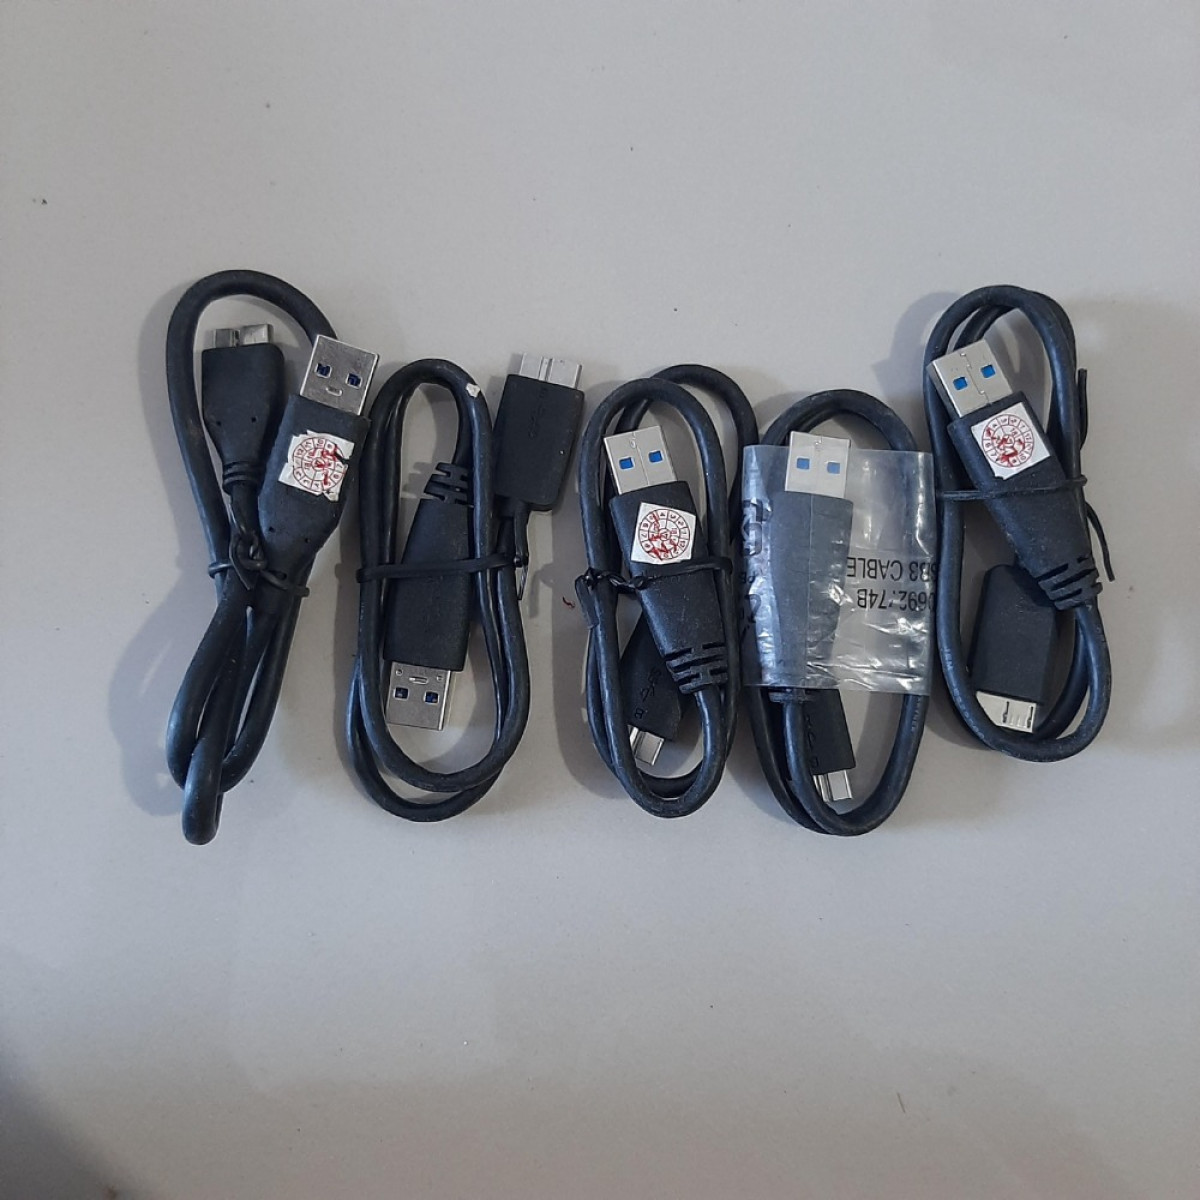 Kabel USB A To Micro B 3.0 kepala dalam warna Biru Kabel Hardisk External